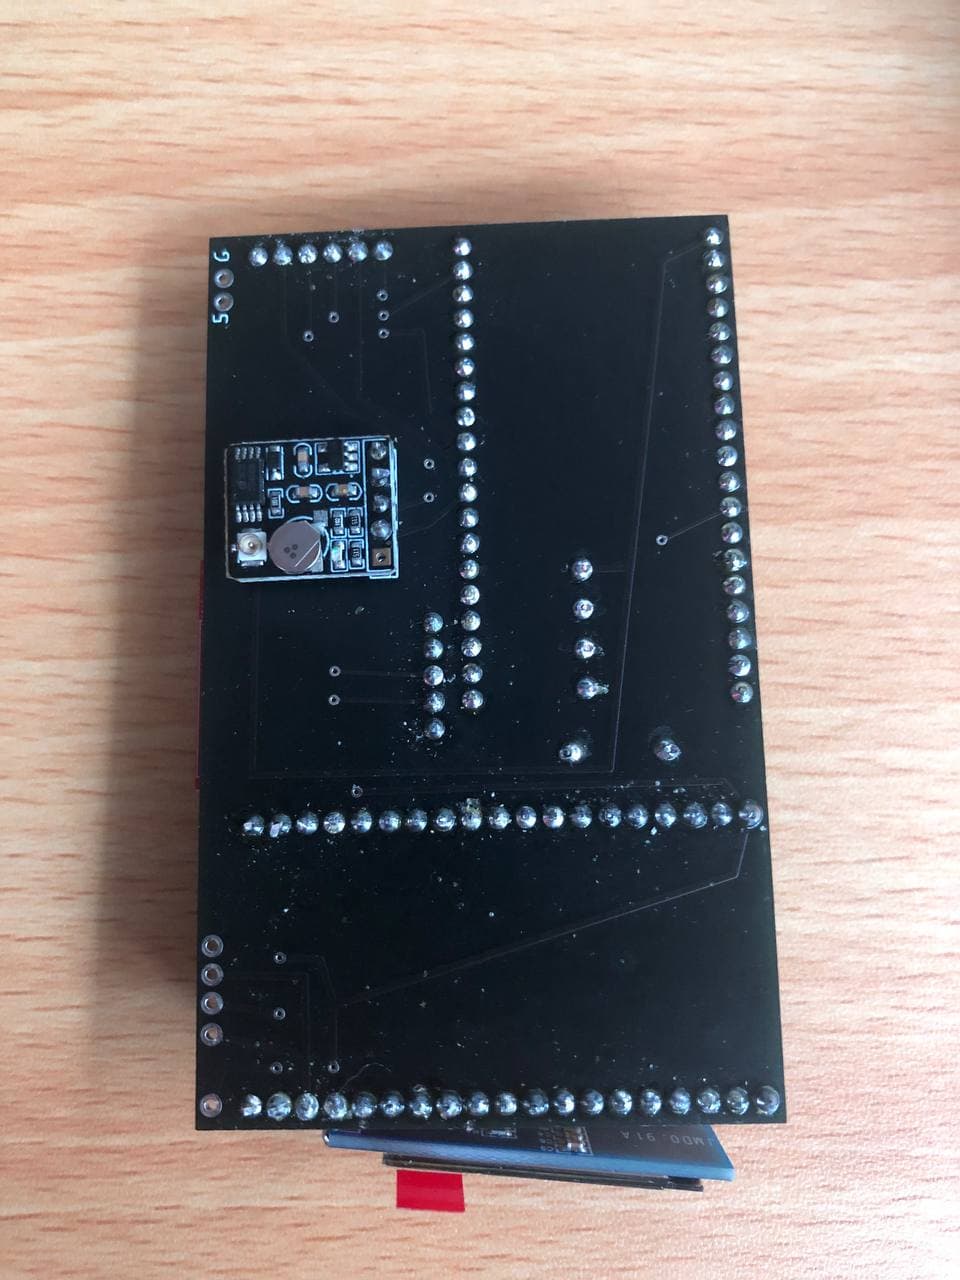 GPS module soldered to Wardriver Rev3 PCB